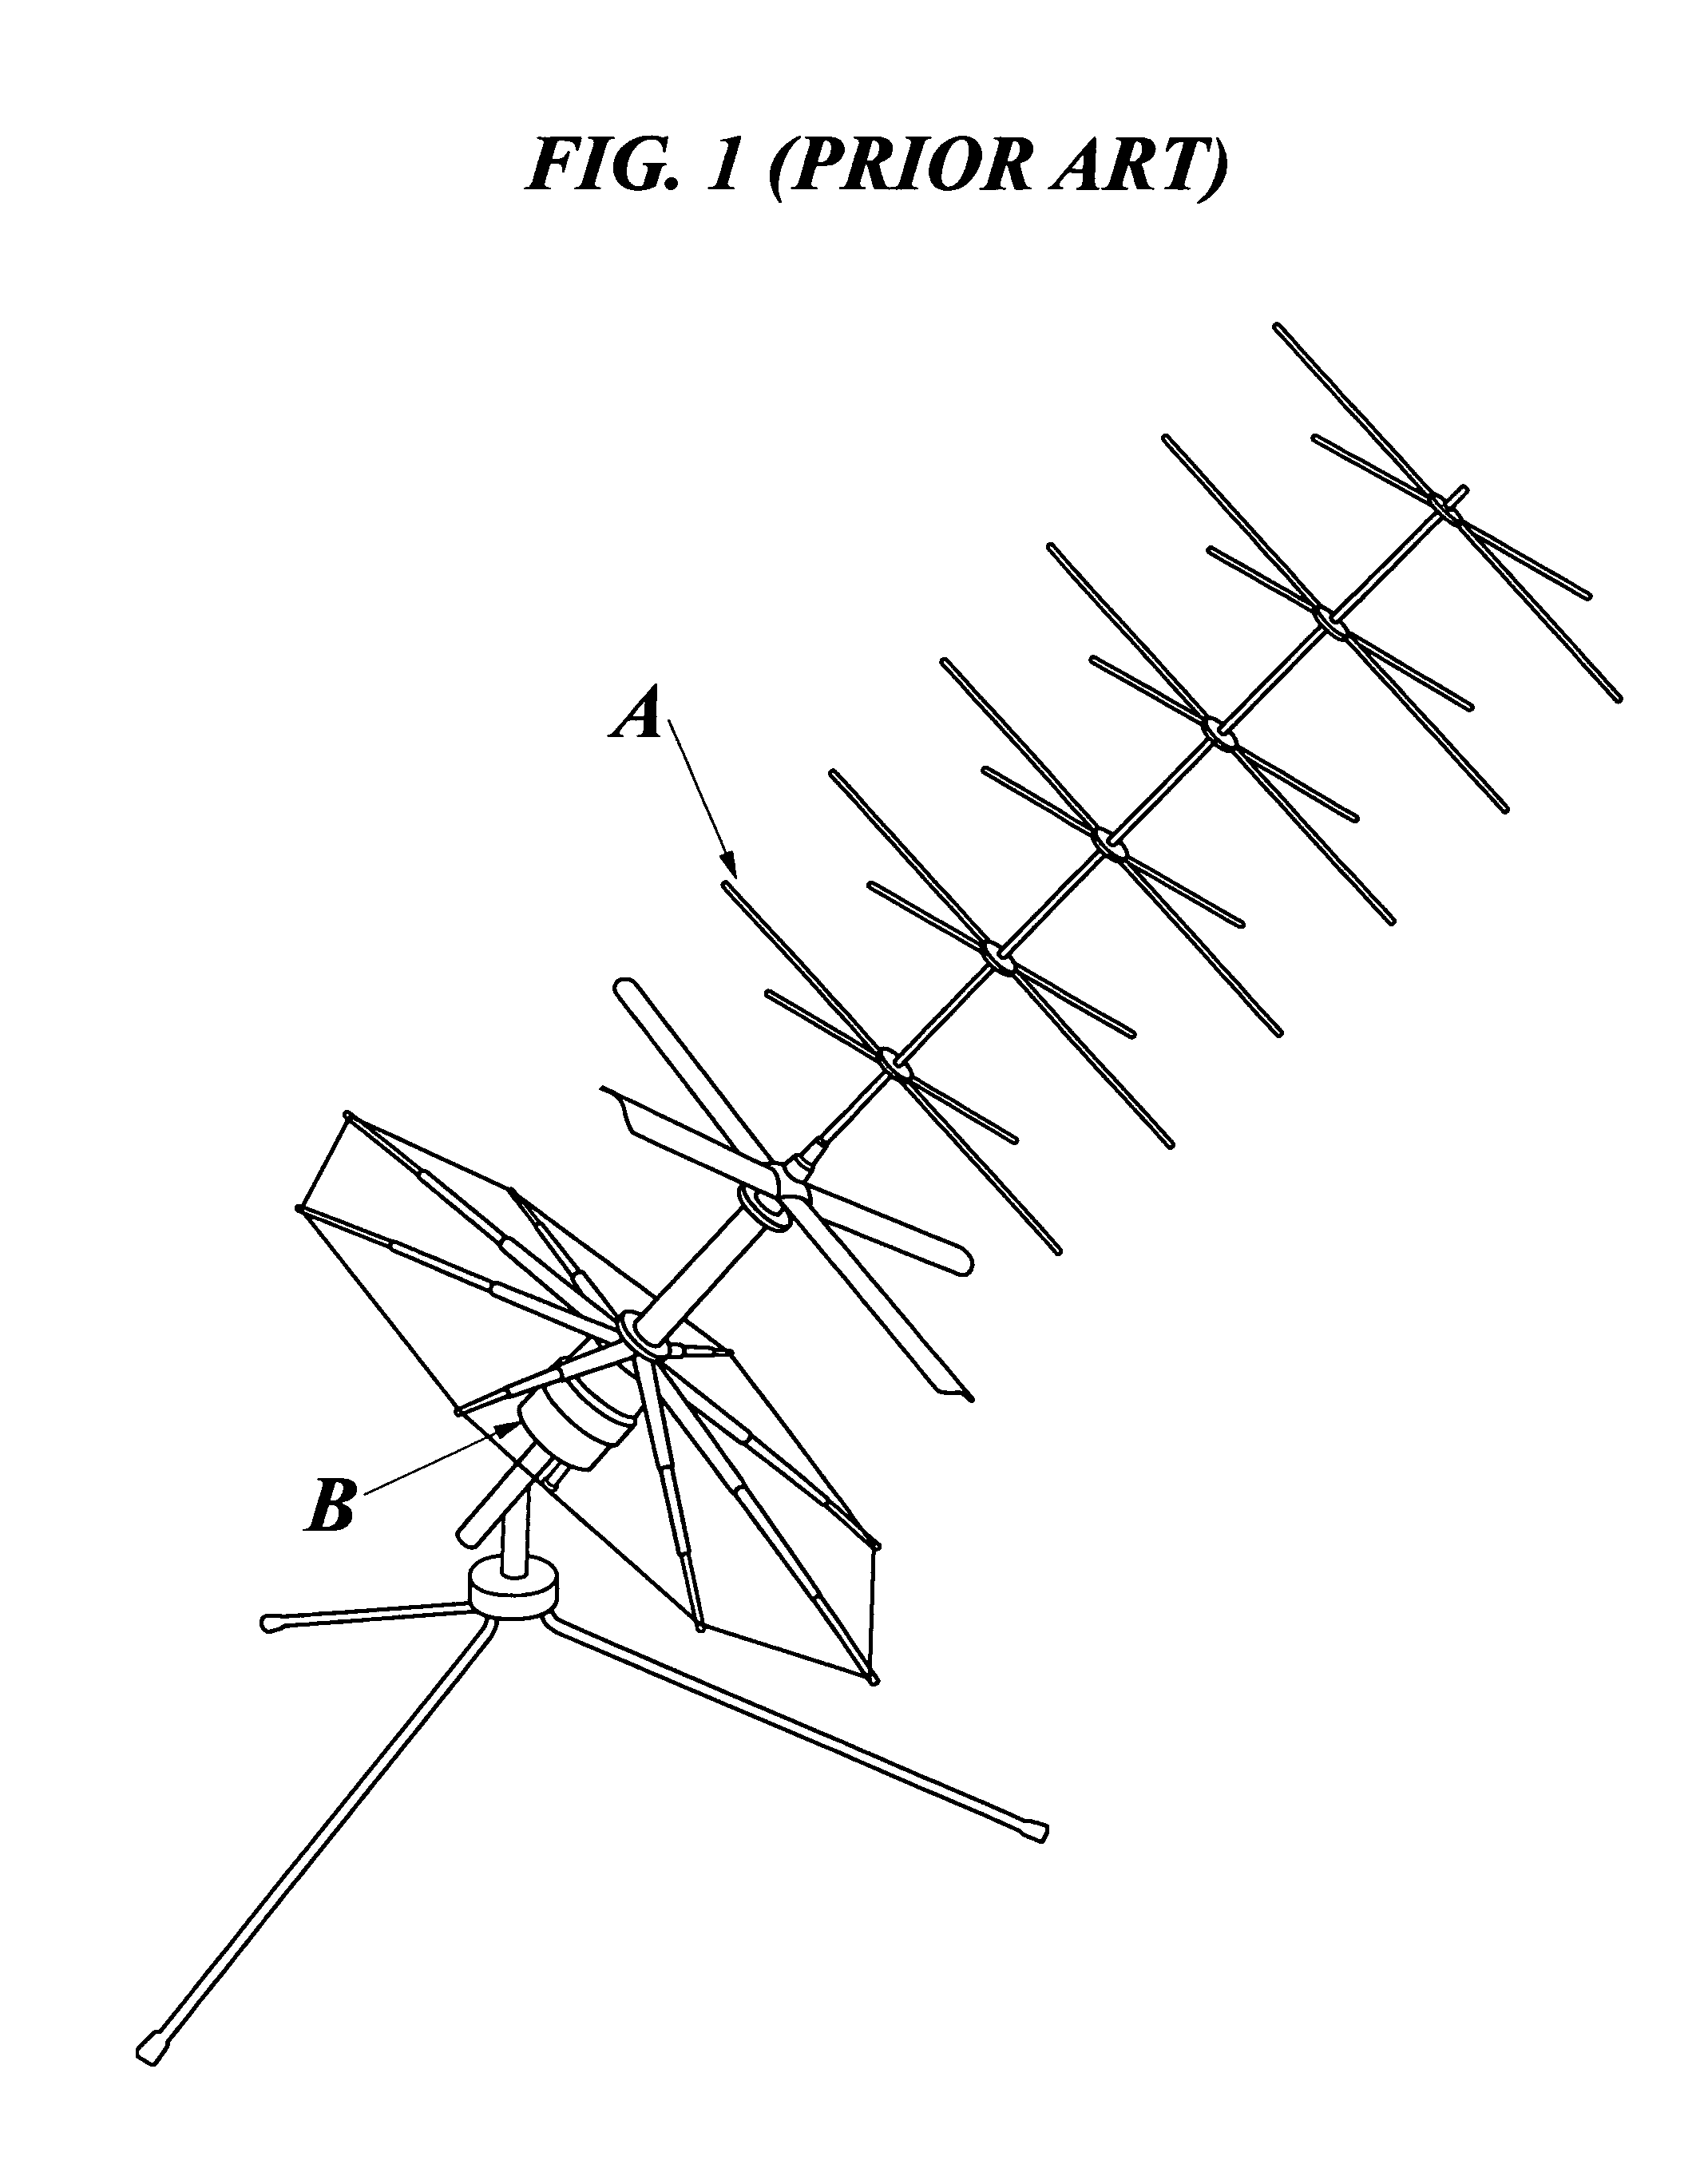 Multi-band portable SATCOM antenna with integral diplexer